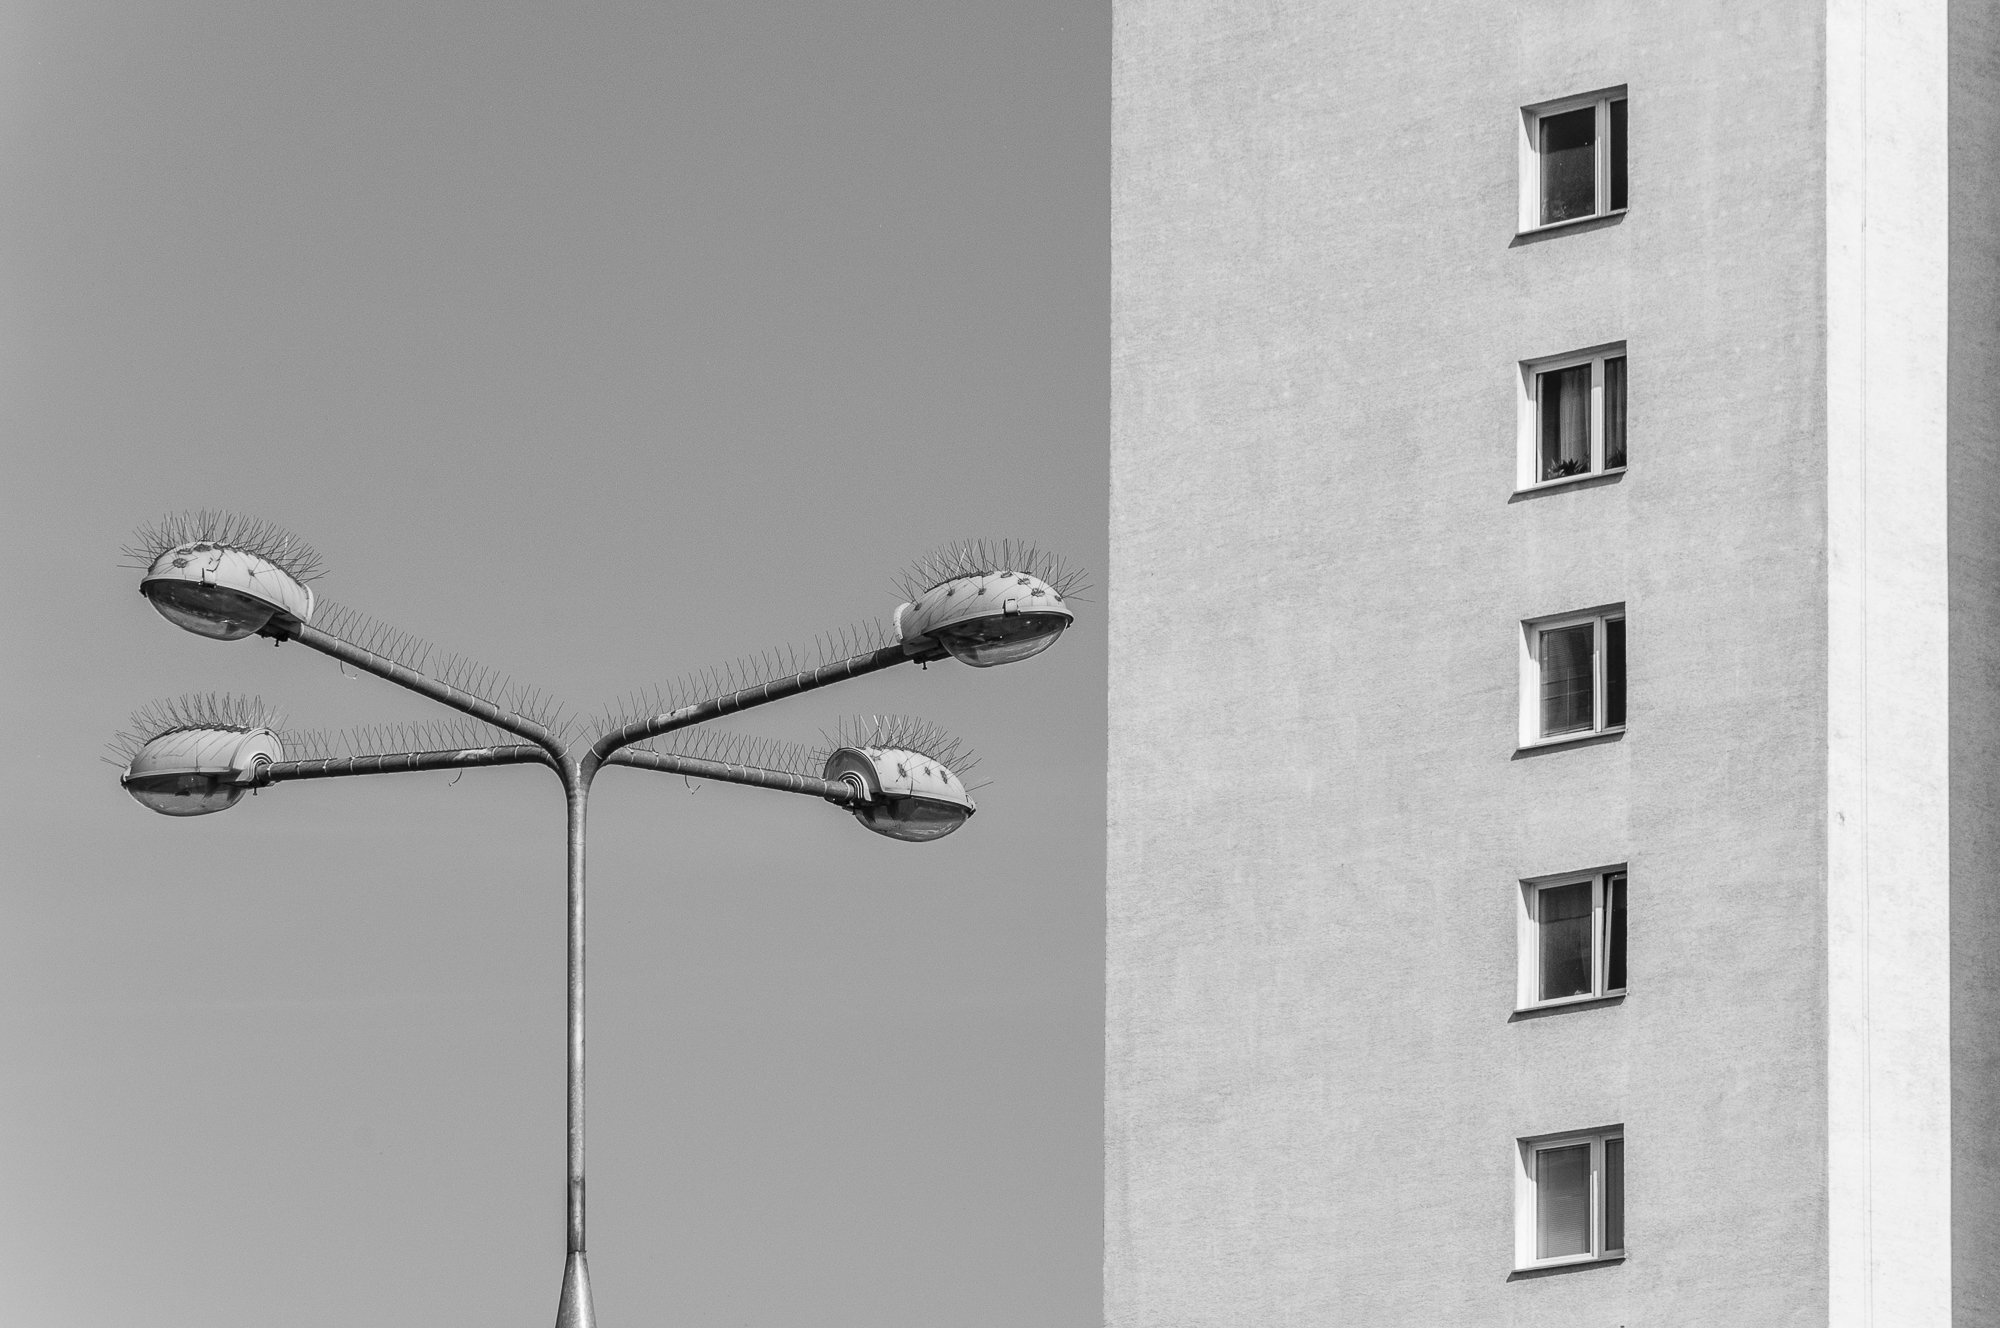 Adam Mazek Photography Warsaw (Warszawa) 2019. Post: "The most astonishing film ever made." Minimalism. Perspective. Street lamp.